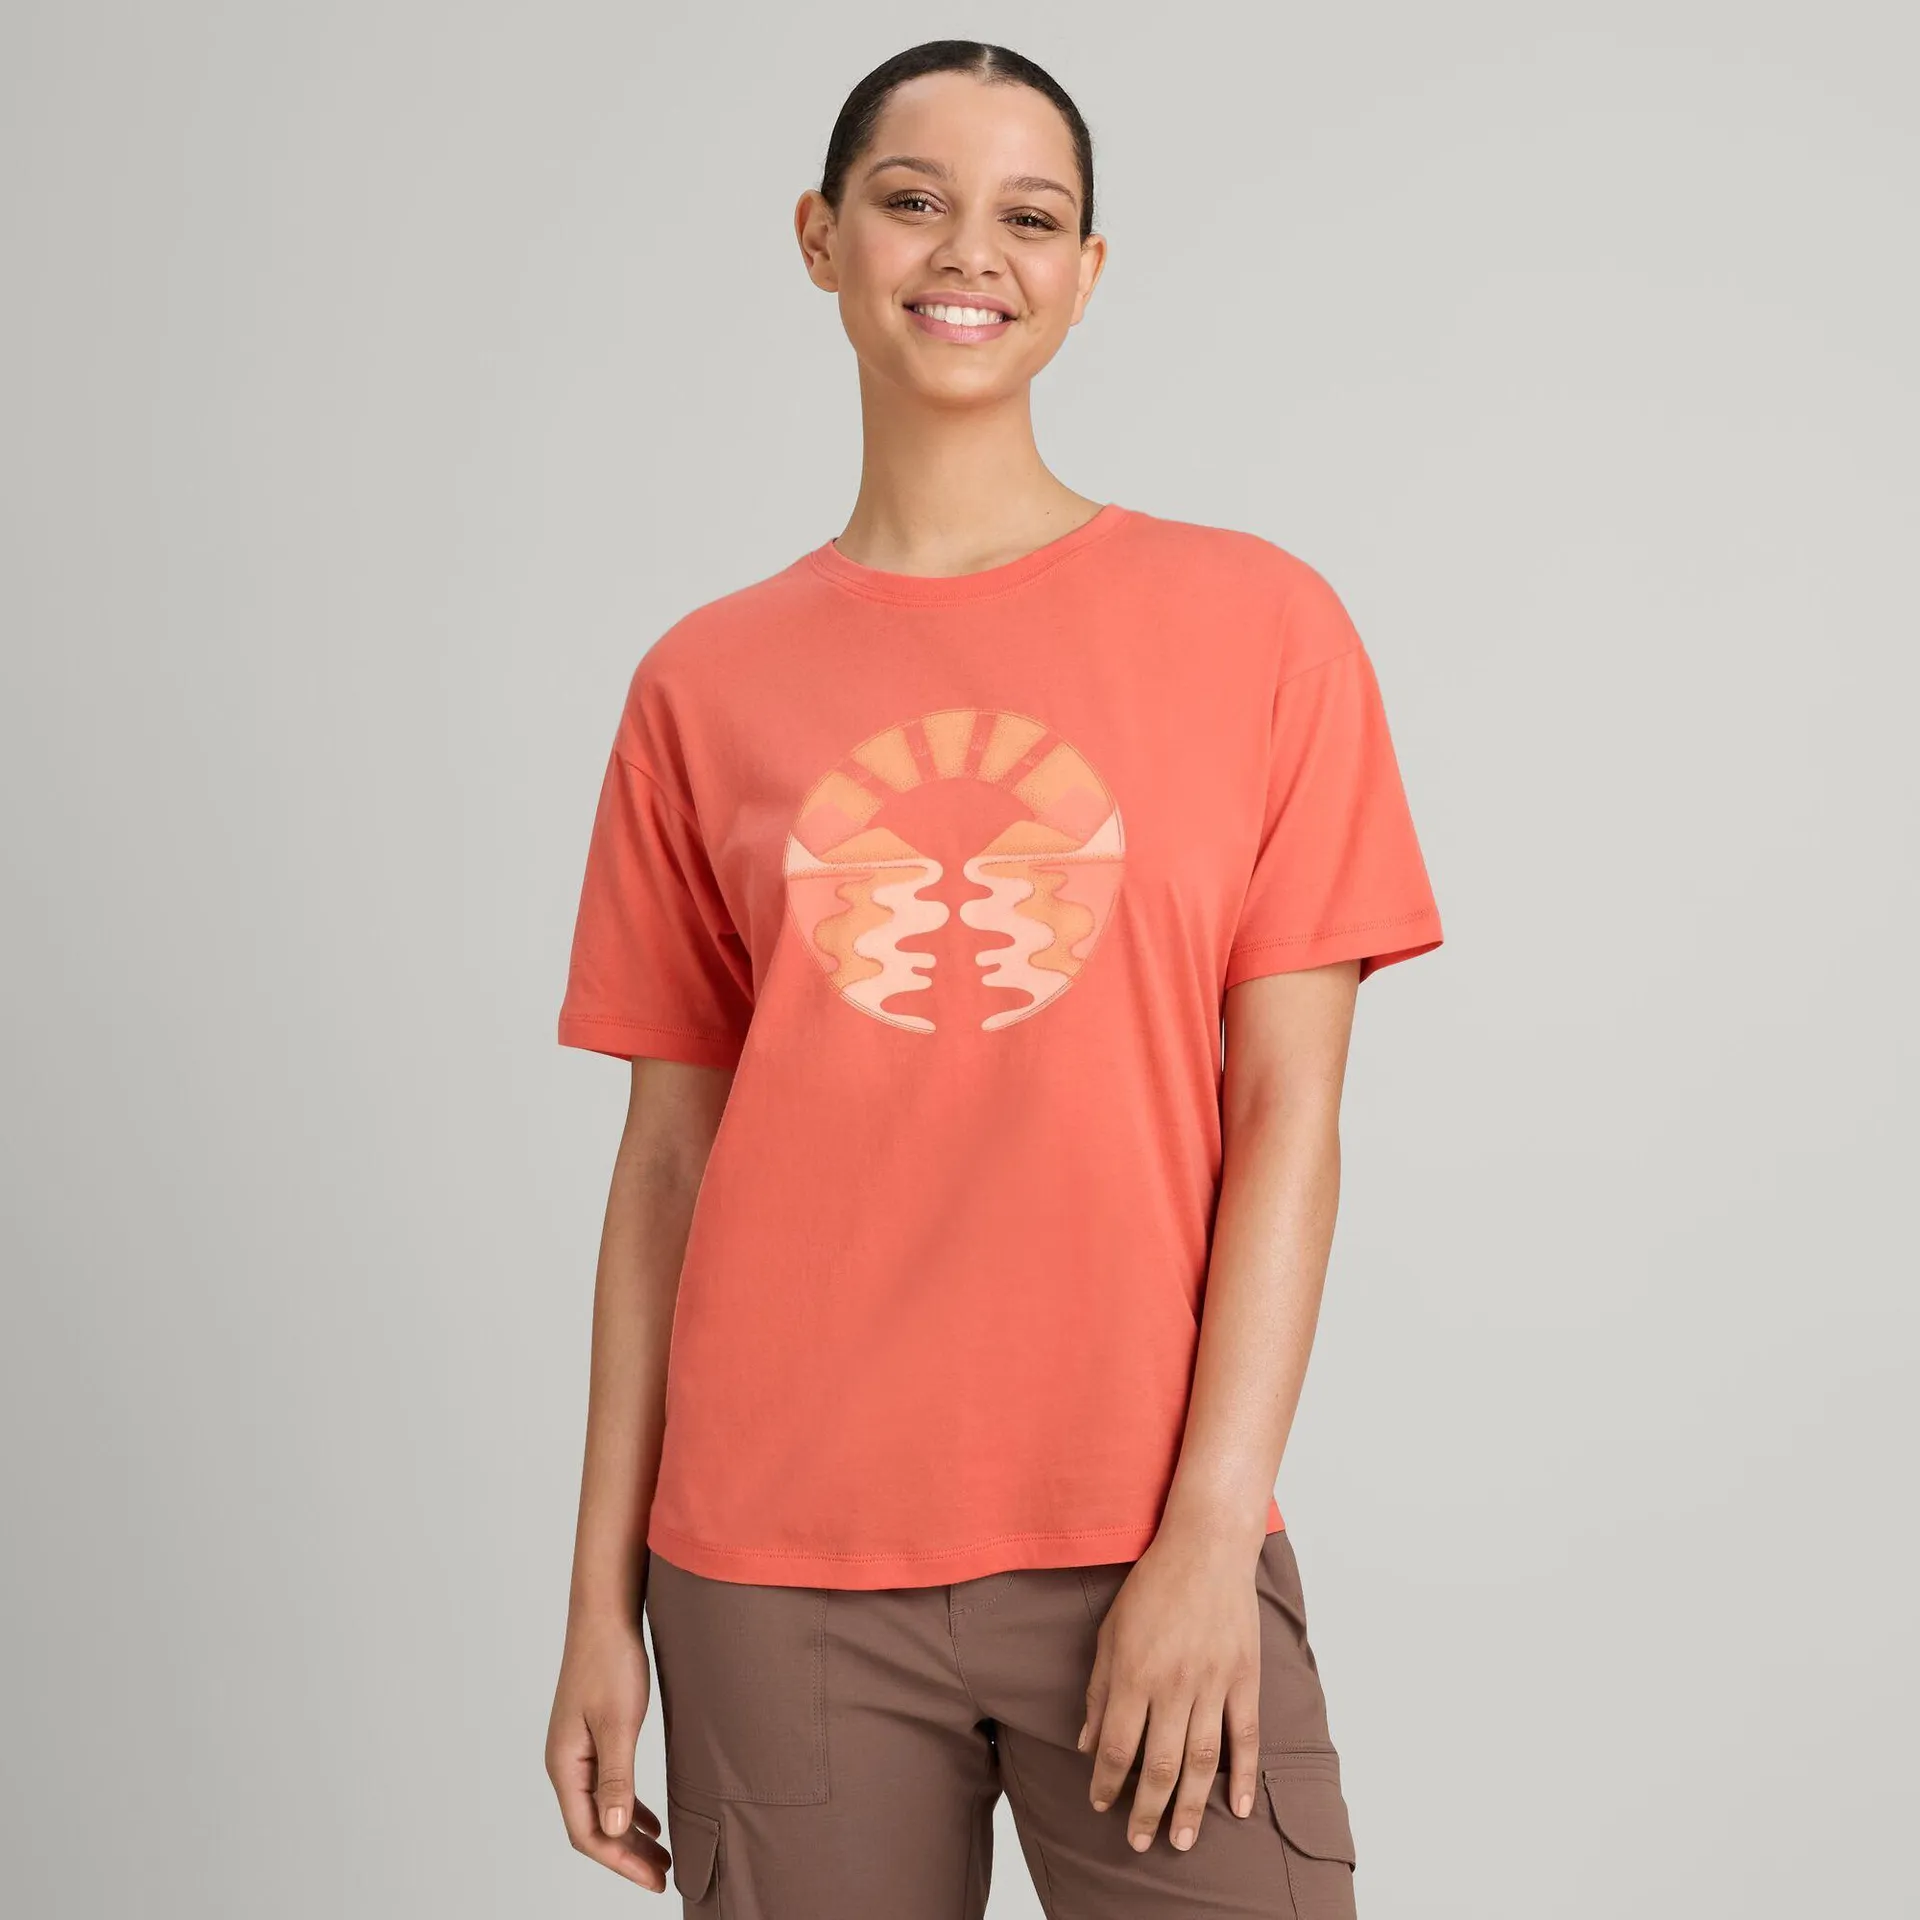 Retro Sunset Women's Organic Cotton T-shirt